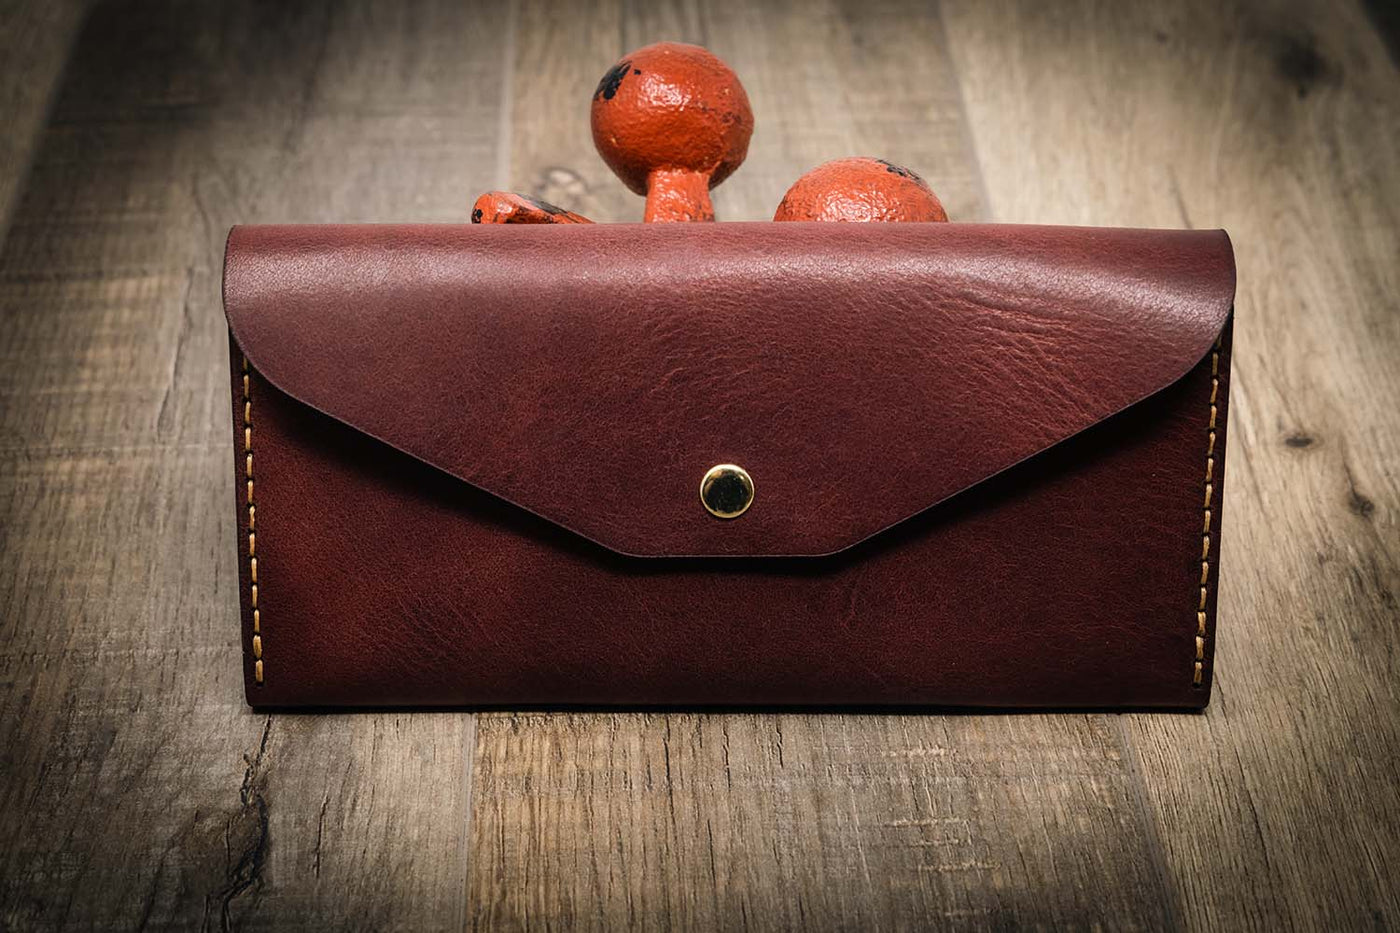 Women's Clutch Wallet | Clutch Leather Wallet - Russet Brown